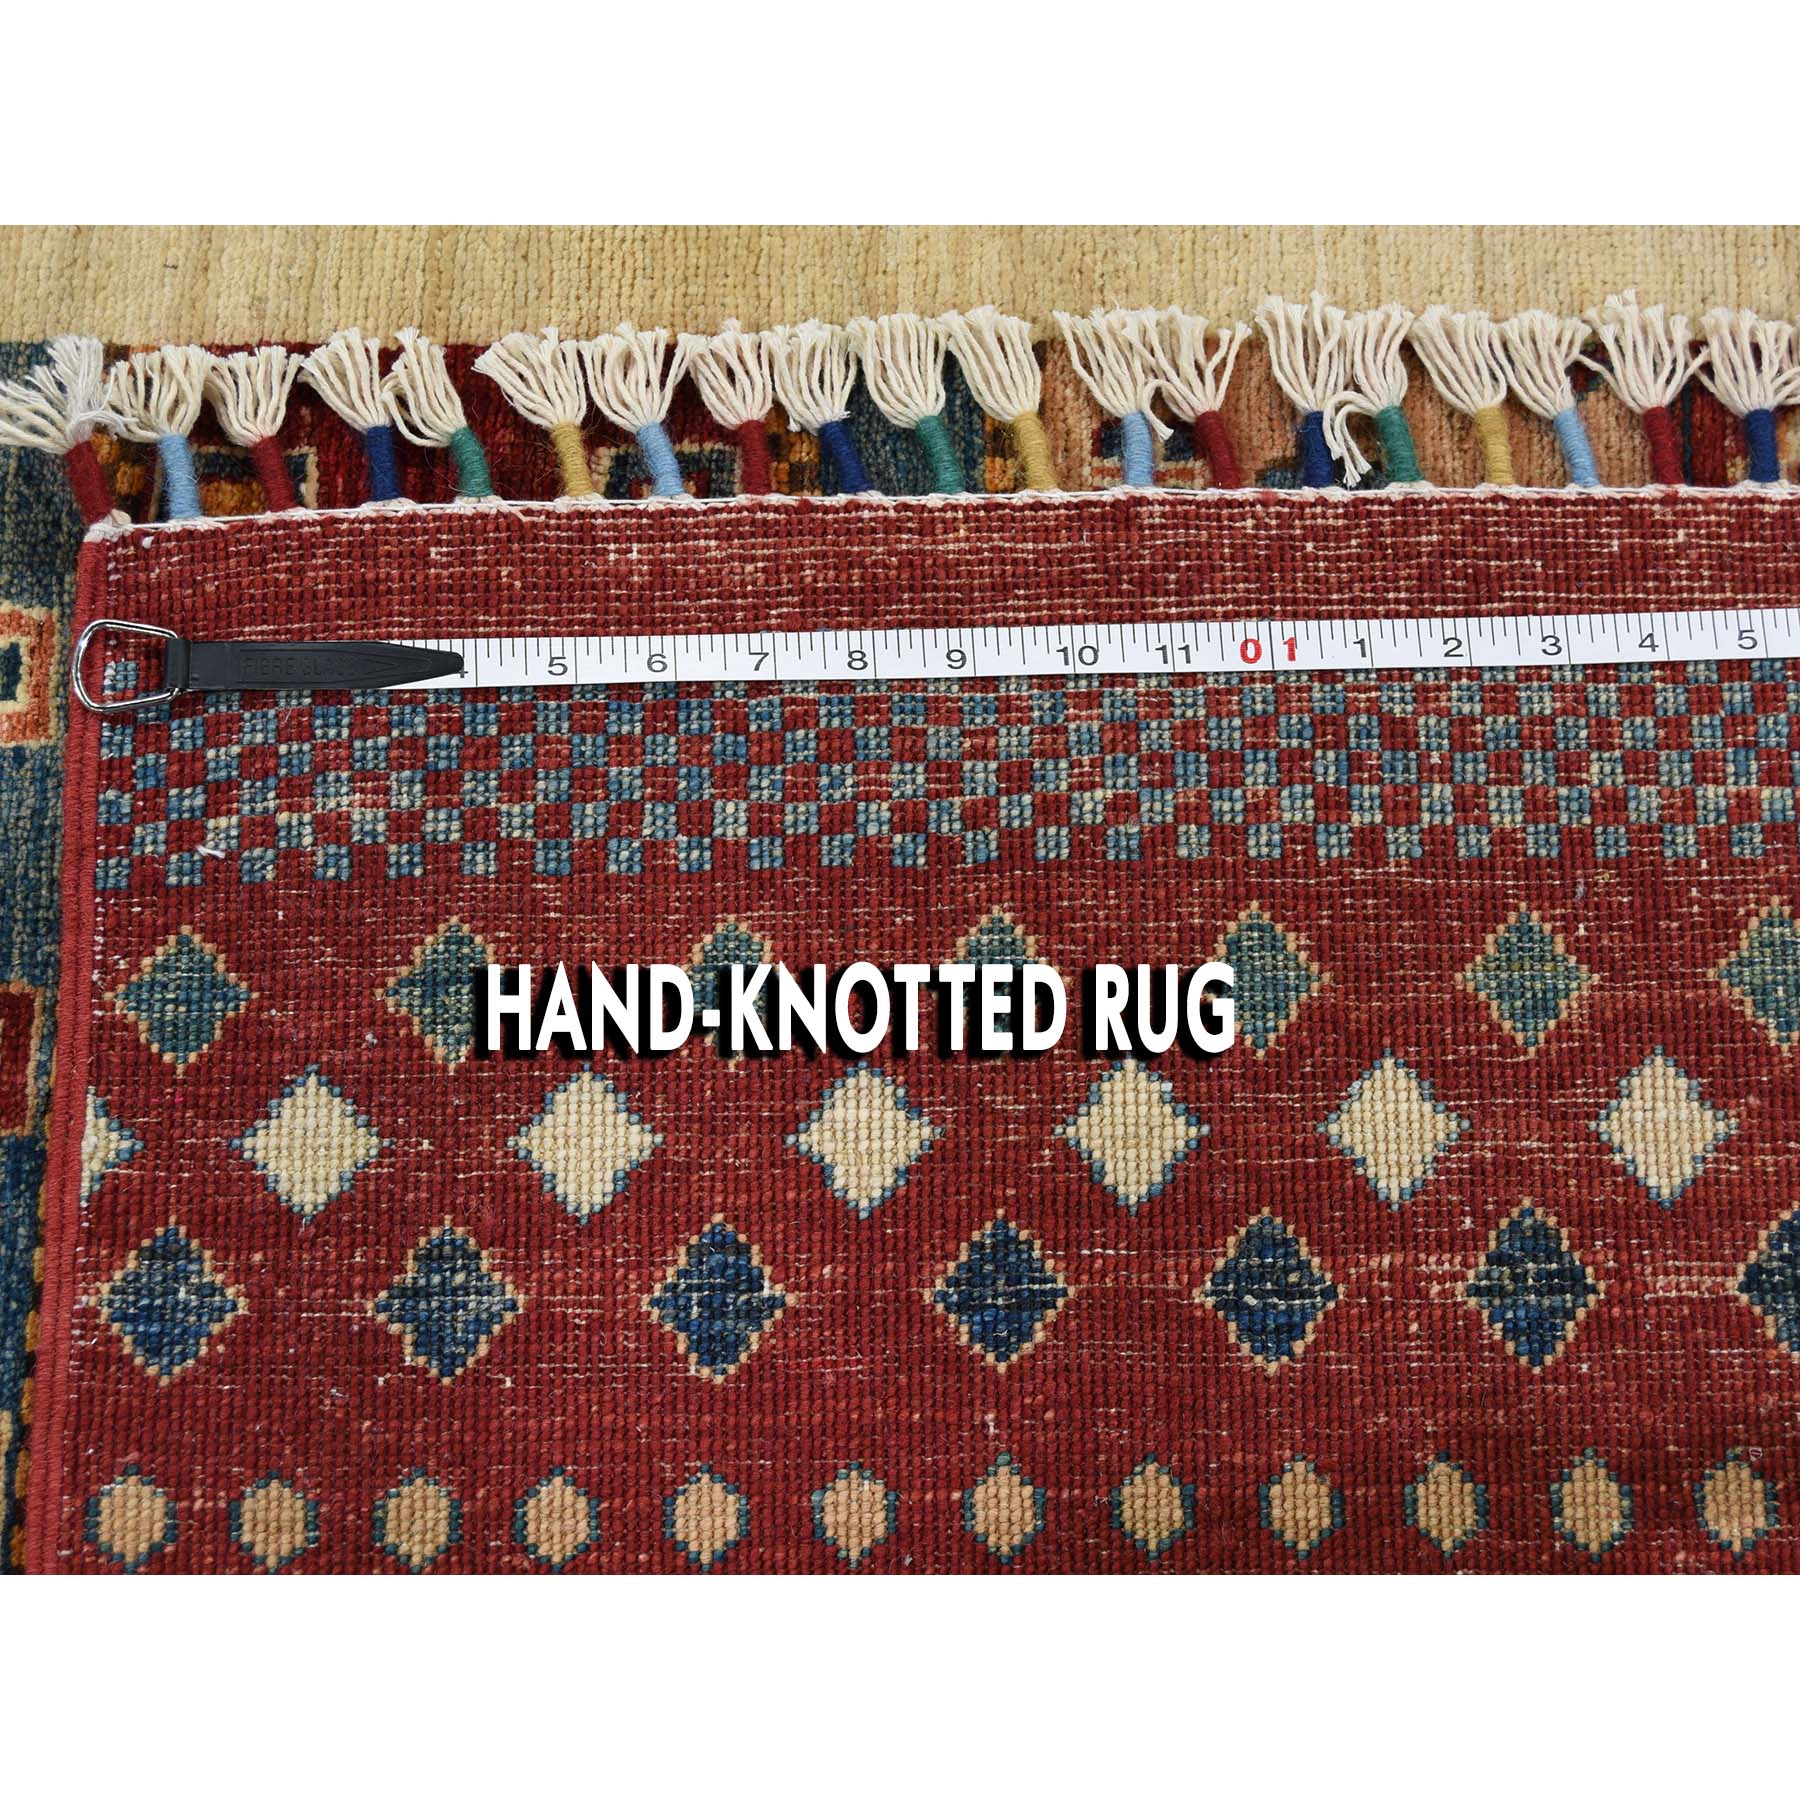 5-x7- Super Kazak Khorjin Design Hand-Knotted Pure Wool Oriental Rug 